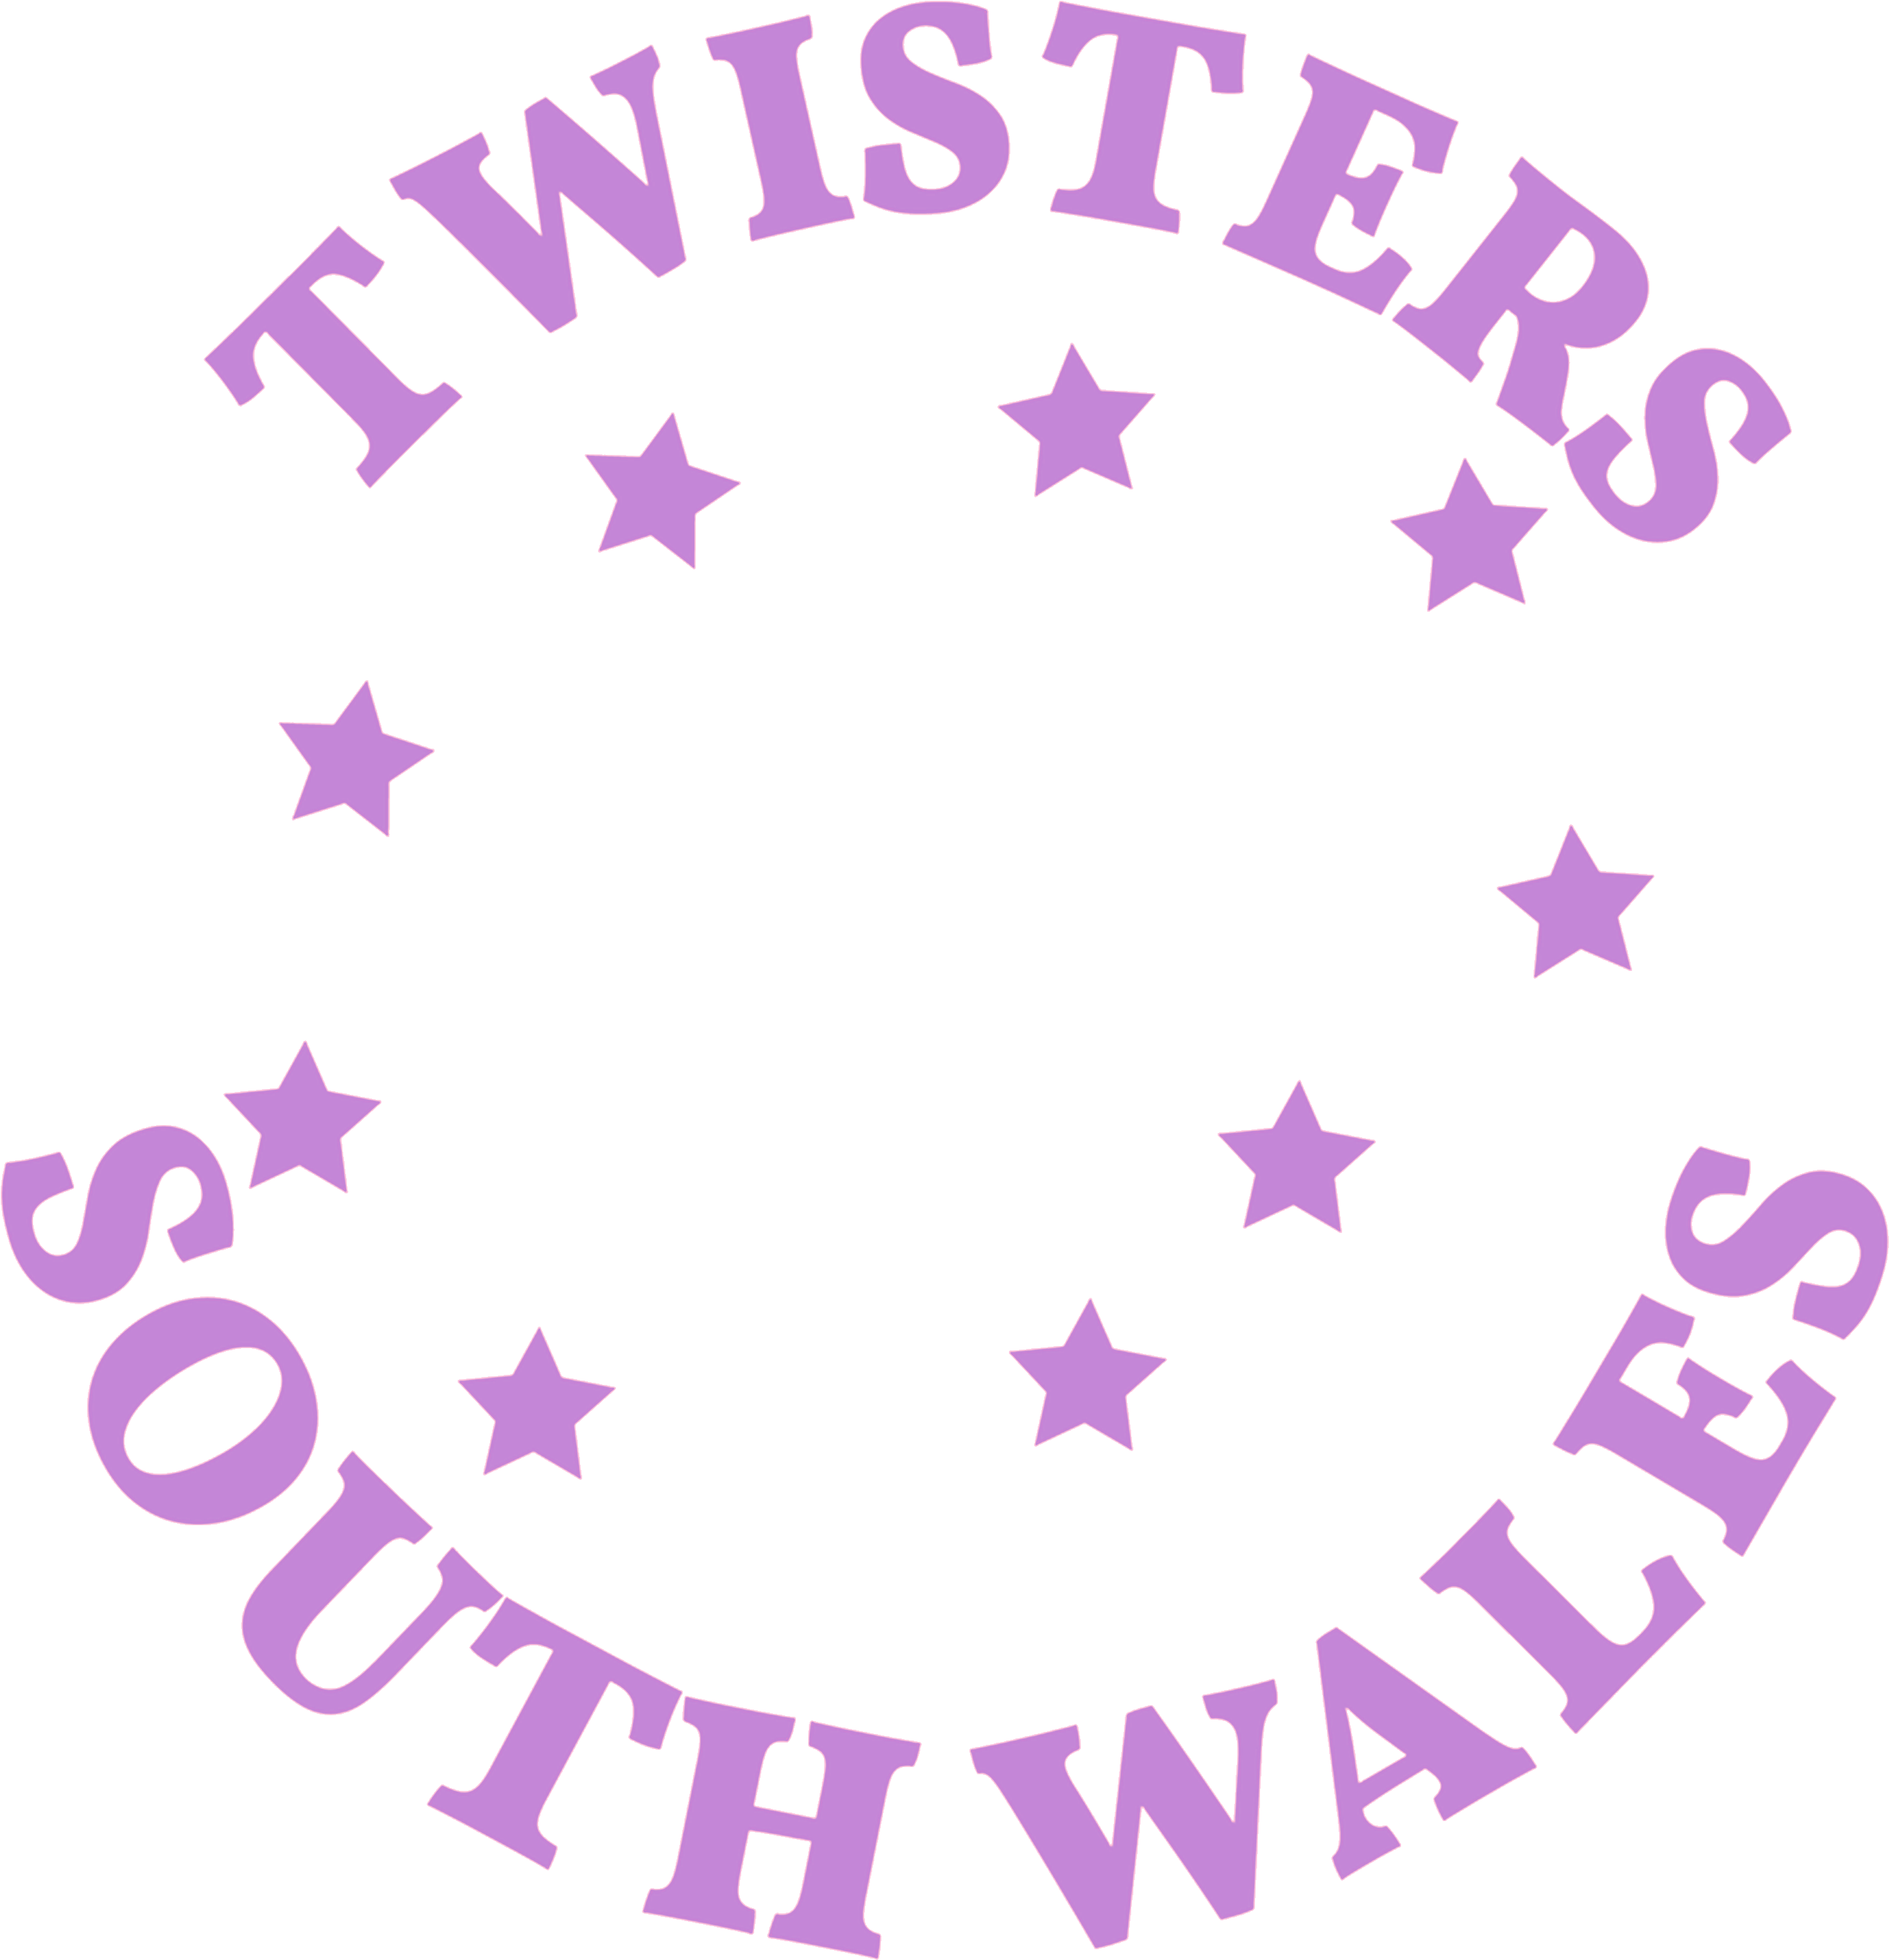 South Wales Trampoline Club - Fire Breathing Rubber Duck (2855x2854)